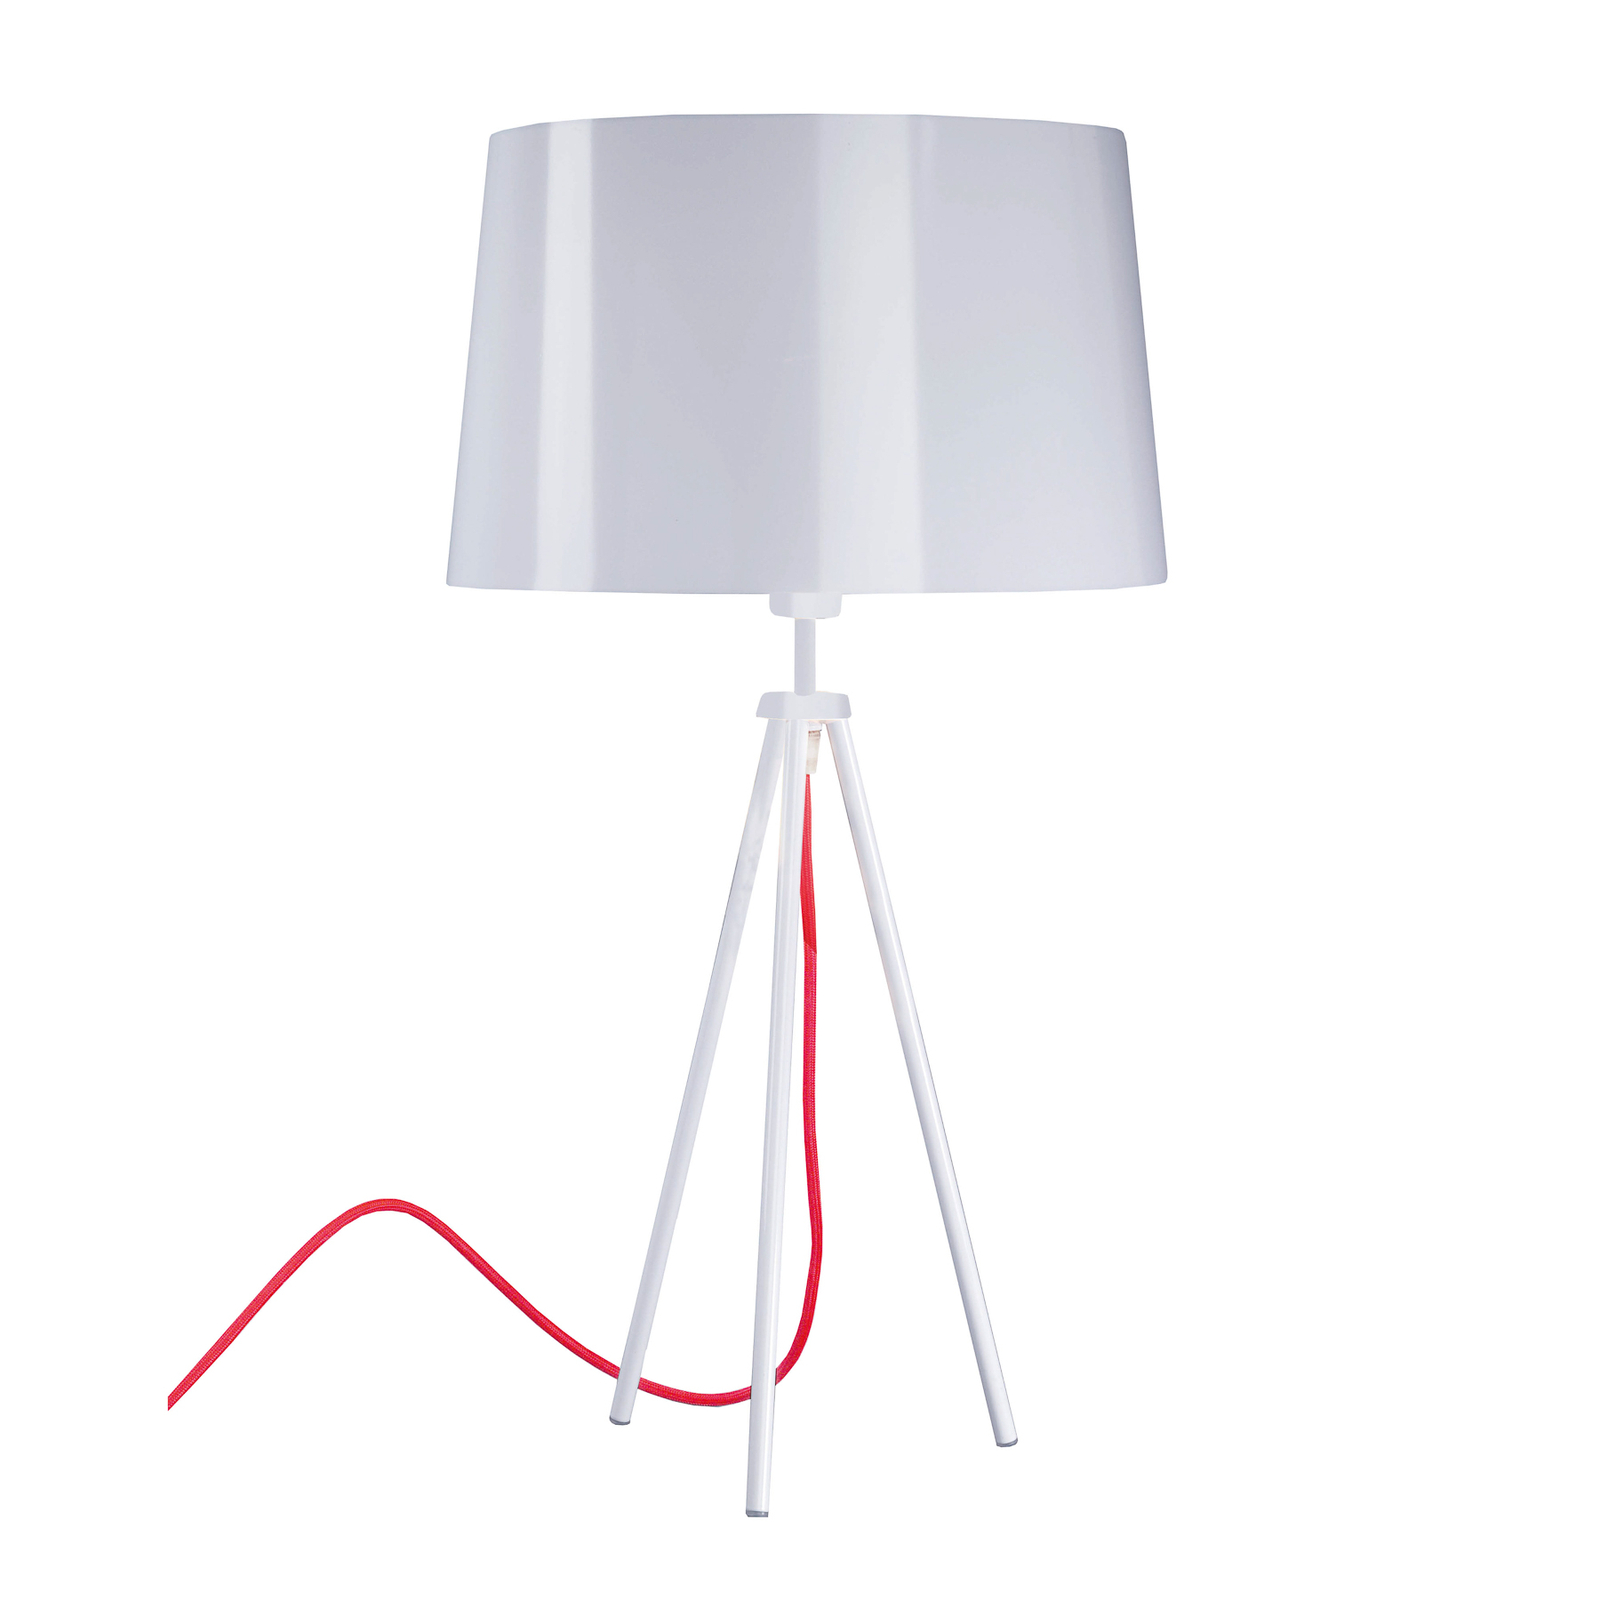 Aluminor Tropic bordlampe, hvid, rødt kabel